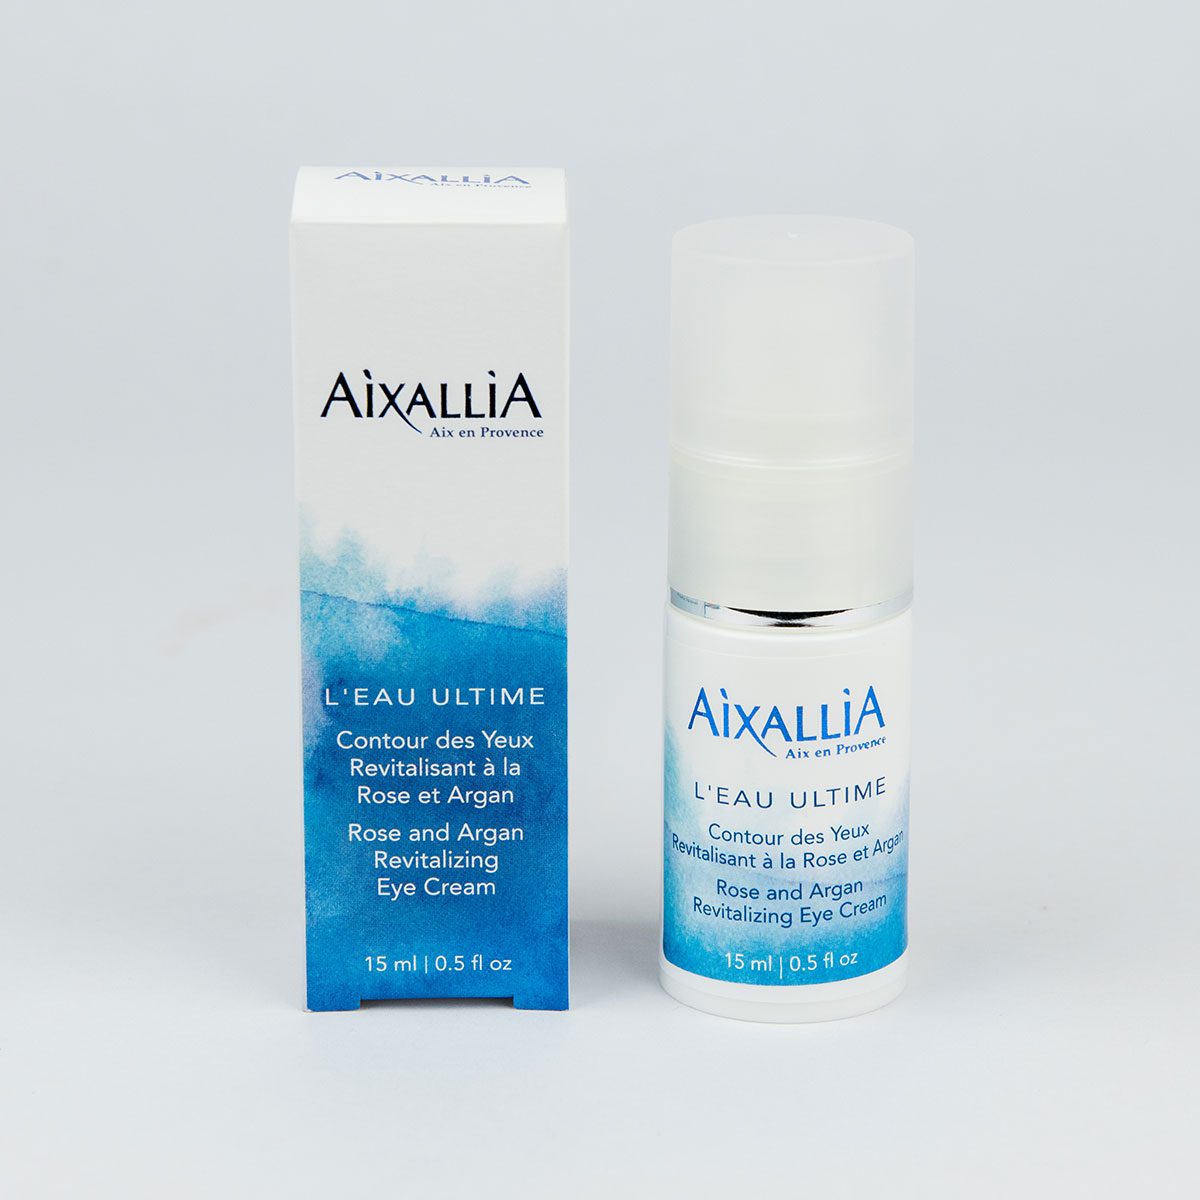 Aixallia Eye Cream Package Design